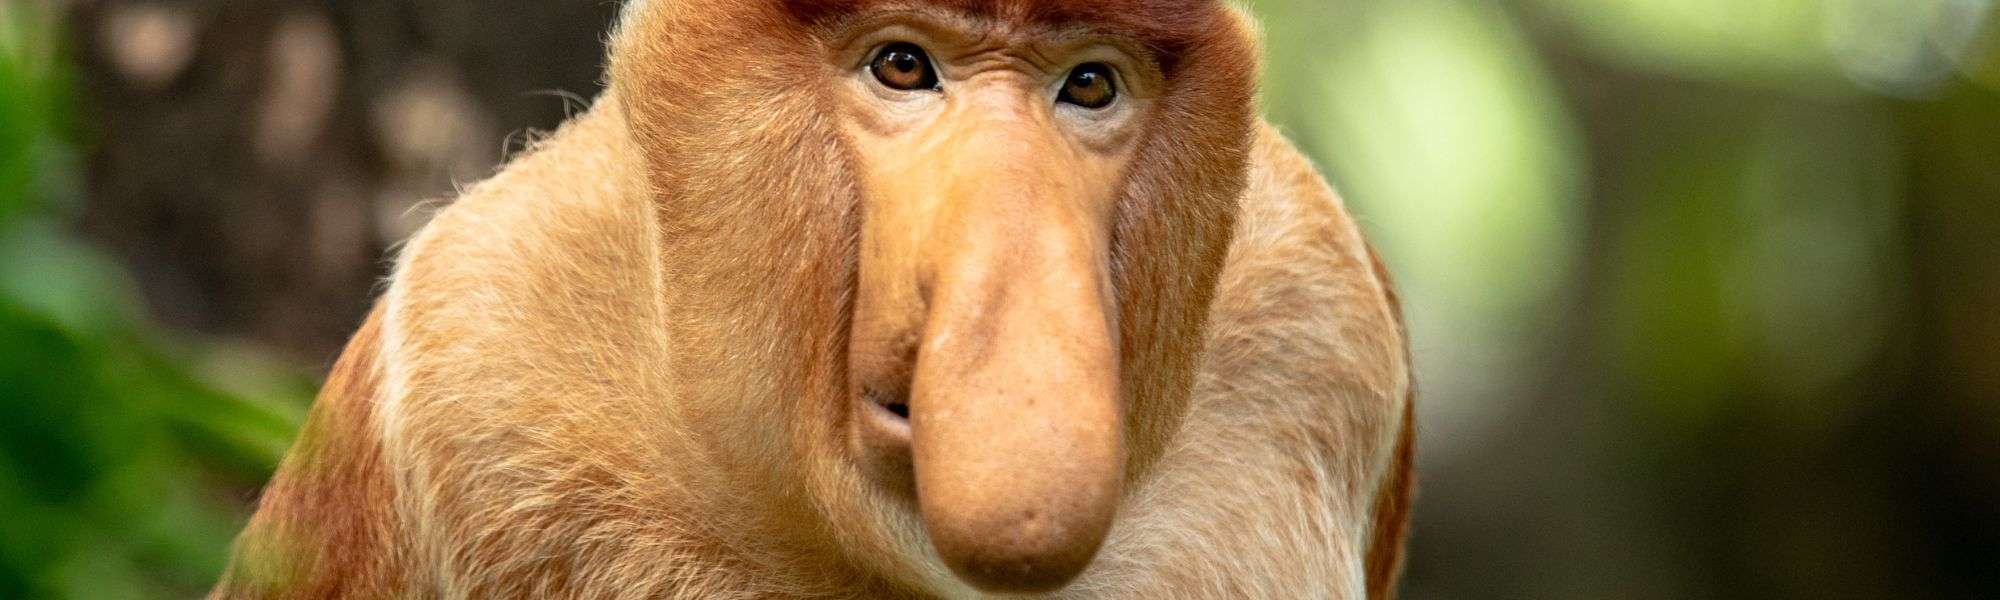 Male proboscis monkeys’ enhanced noses evolved to attract mates